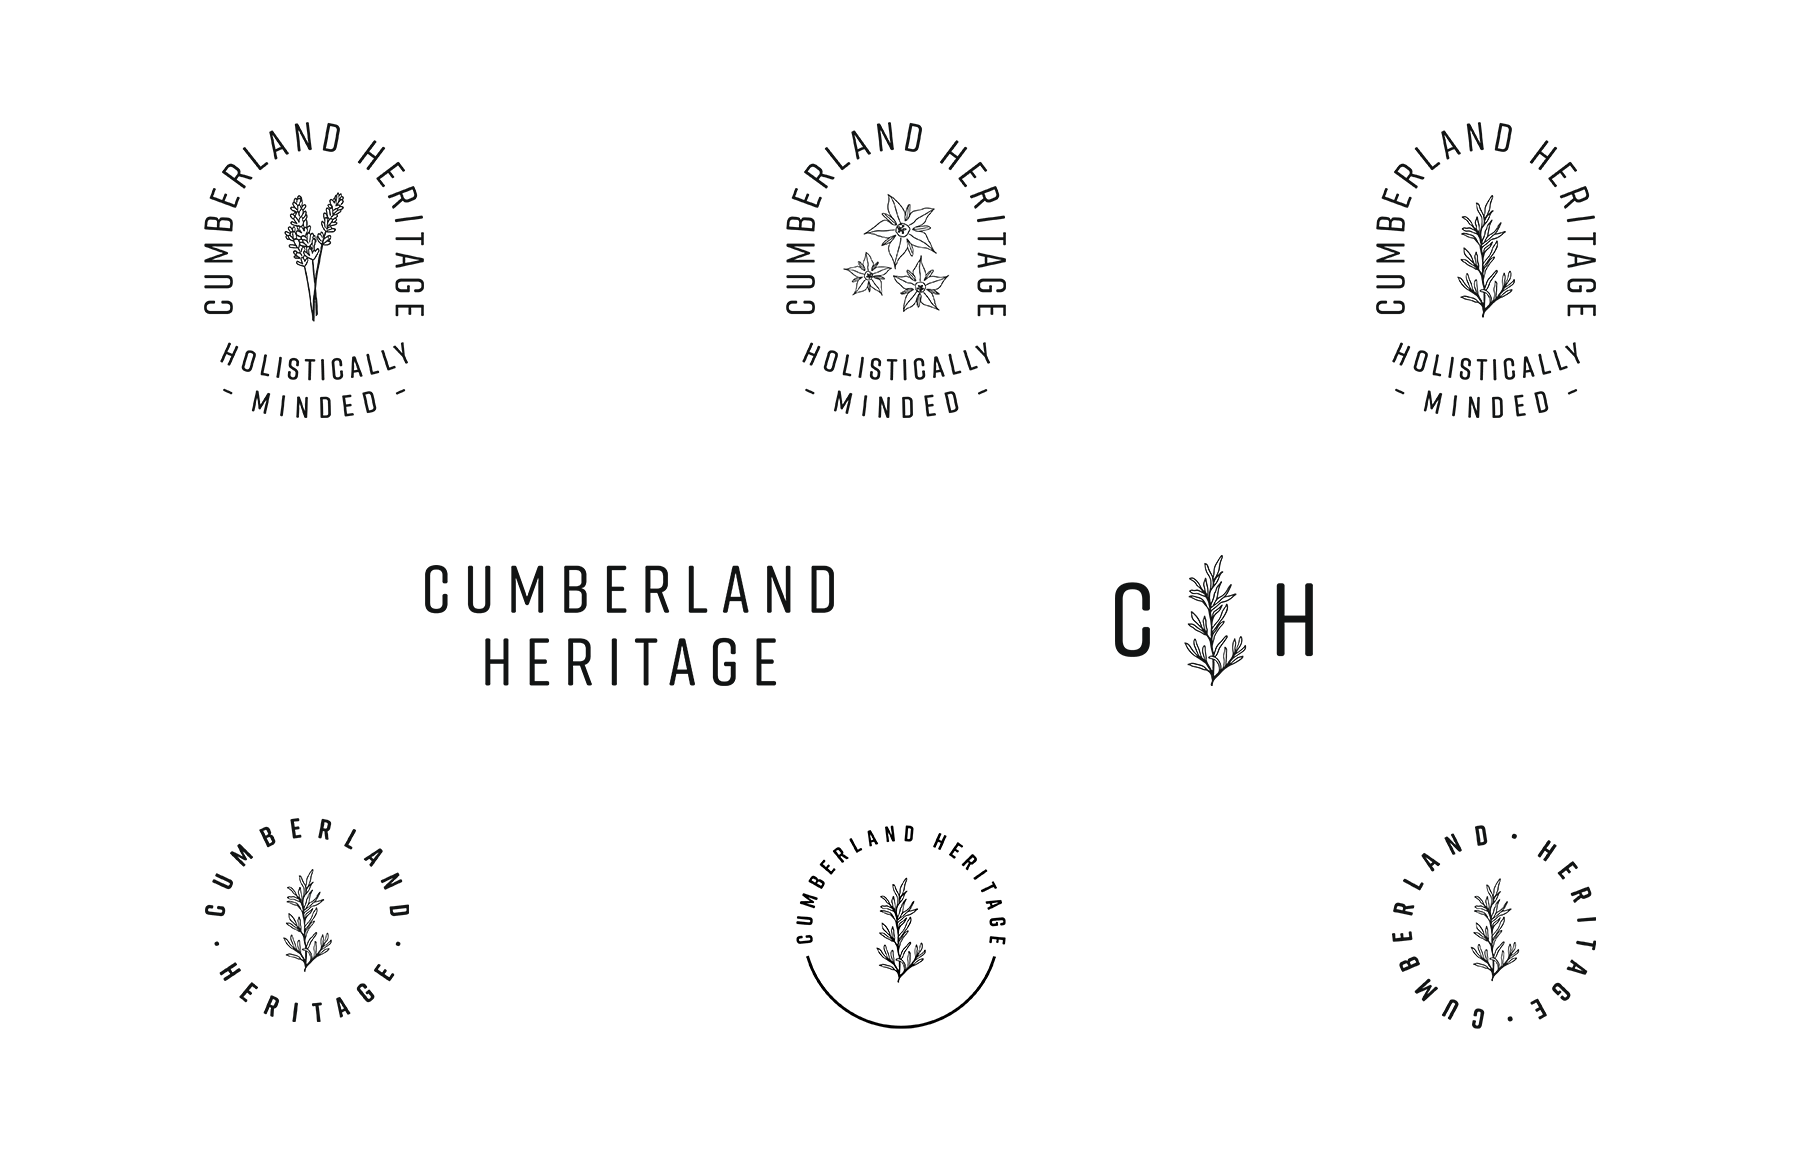 Cumberland Heritage alternate logos